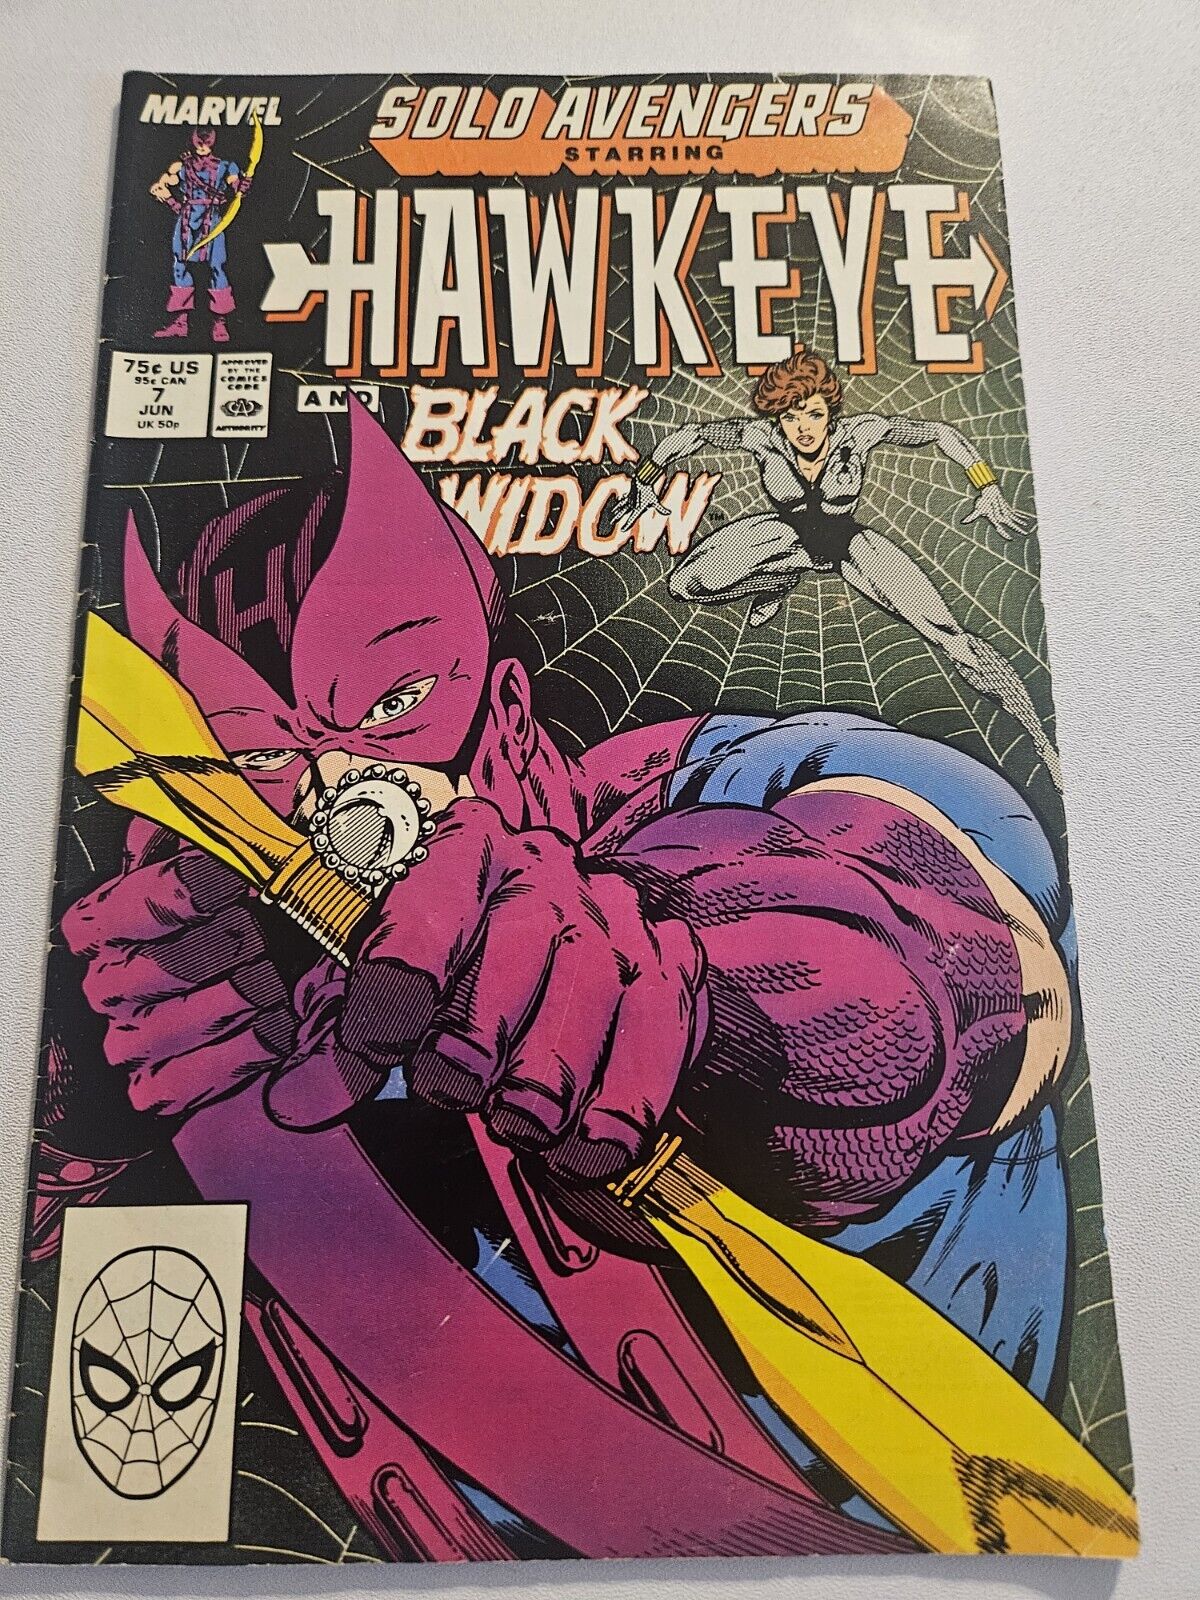 Solo Avengers: Hawkeye And Black Widow #7 Marvel Comics 1988 Copper Age